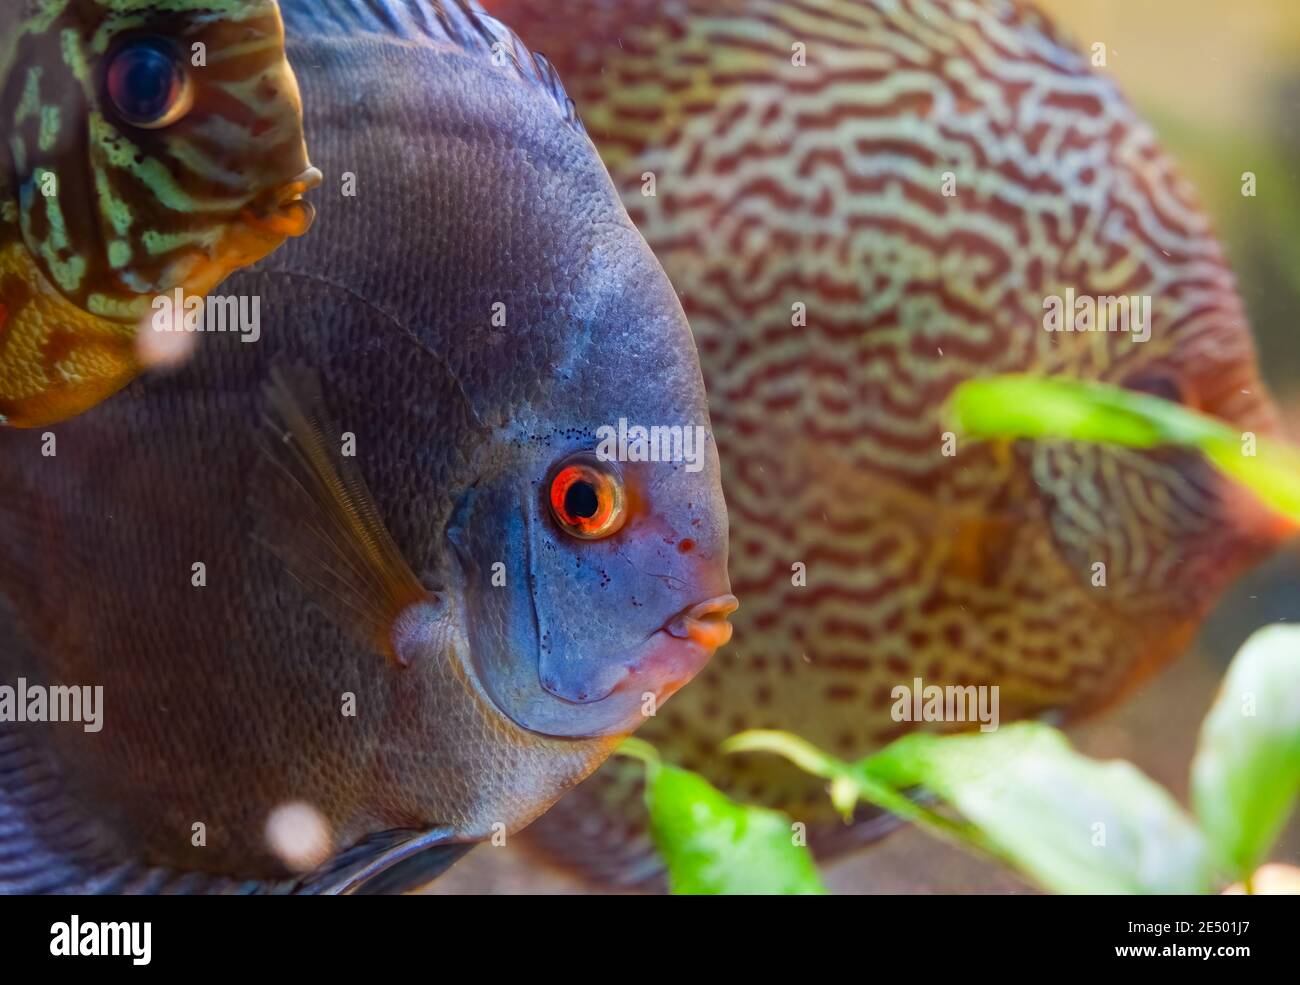 Discus fish in aquarium, tropical fish. Symphysodon discus from Amazon river. Stock Photo